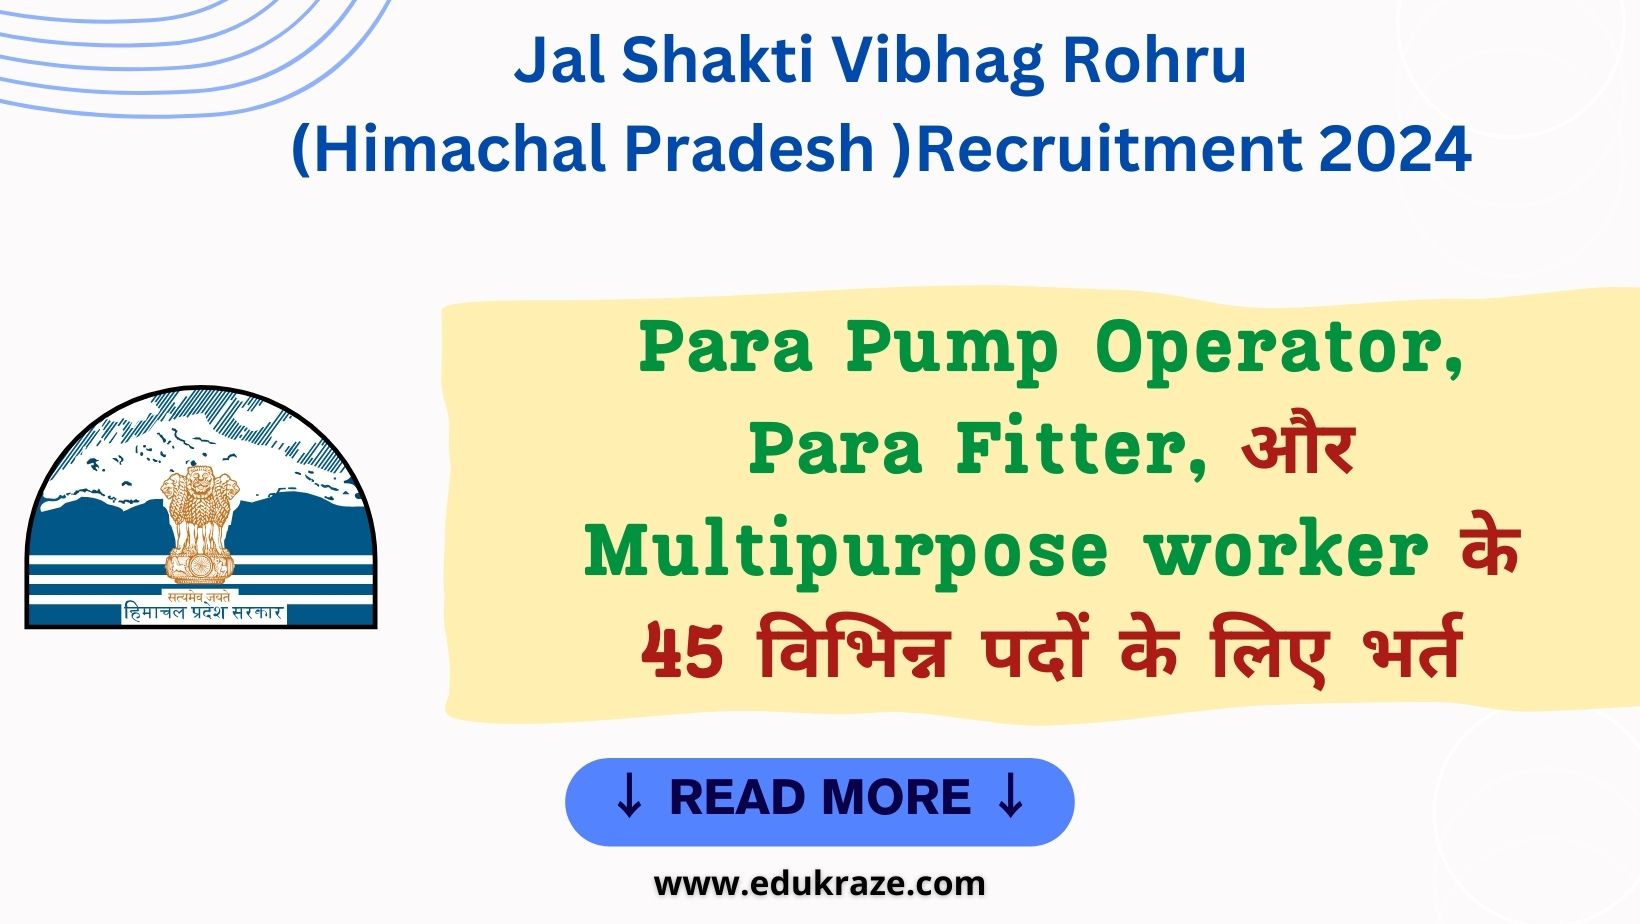 HP Jal Shakti Vibhag Division Rohru Recruitment 2024 Out For Para Pump Operator, Para Fitter & Multipurpose Worker